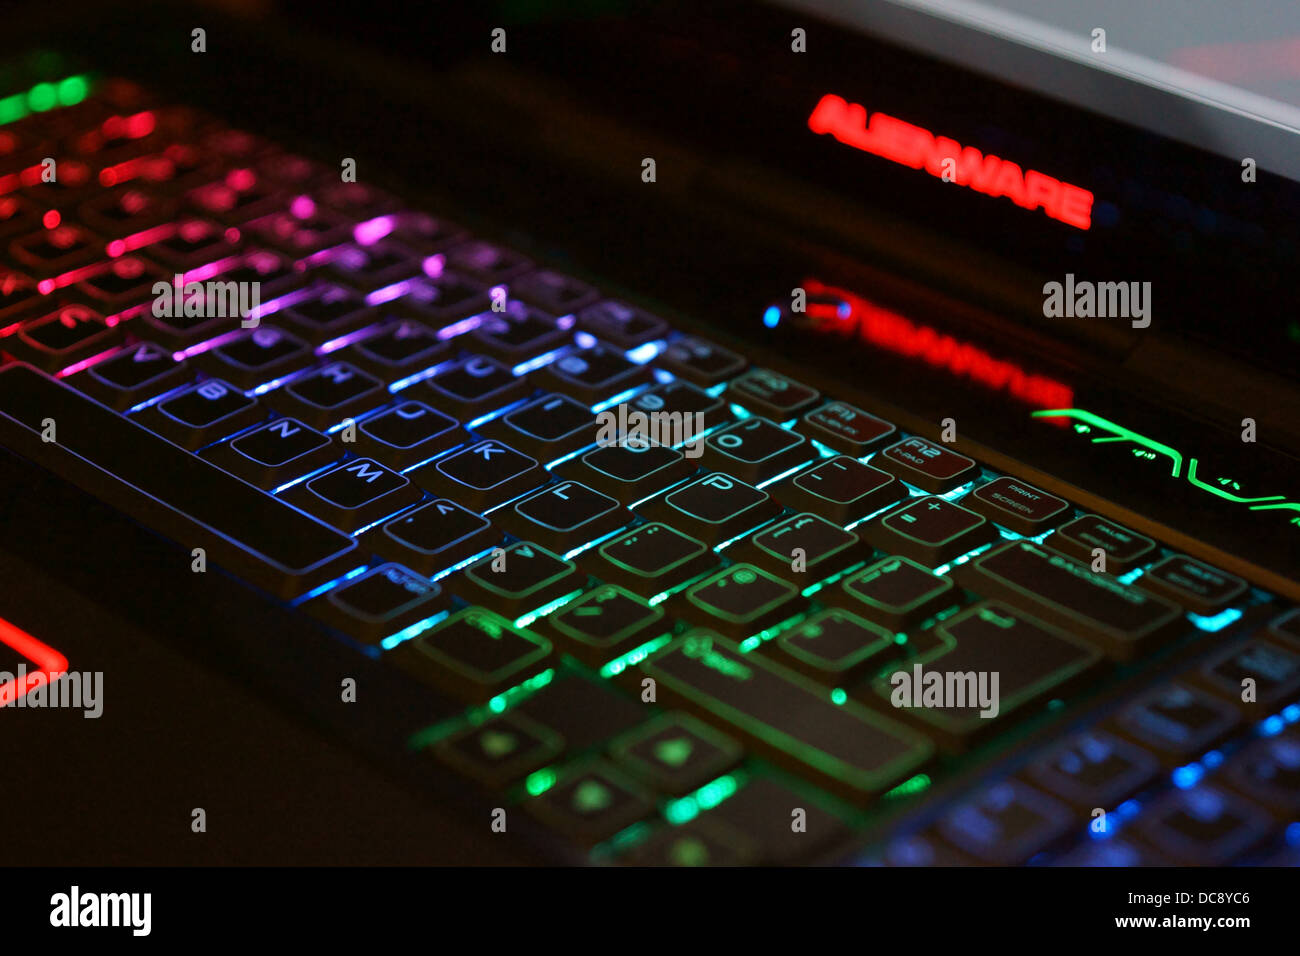 dell alienware laptop keyboard lights light up green blue purple blue red  glowing Stock Photo - Alamy